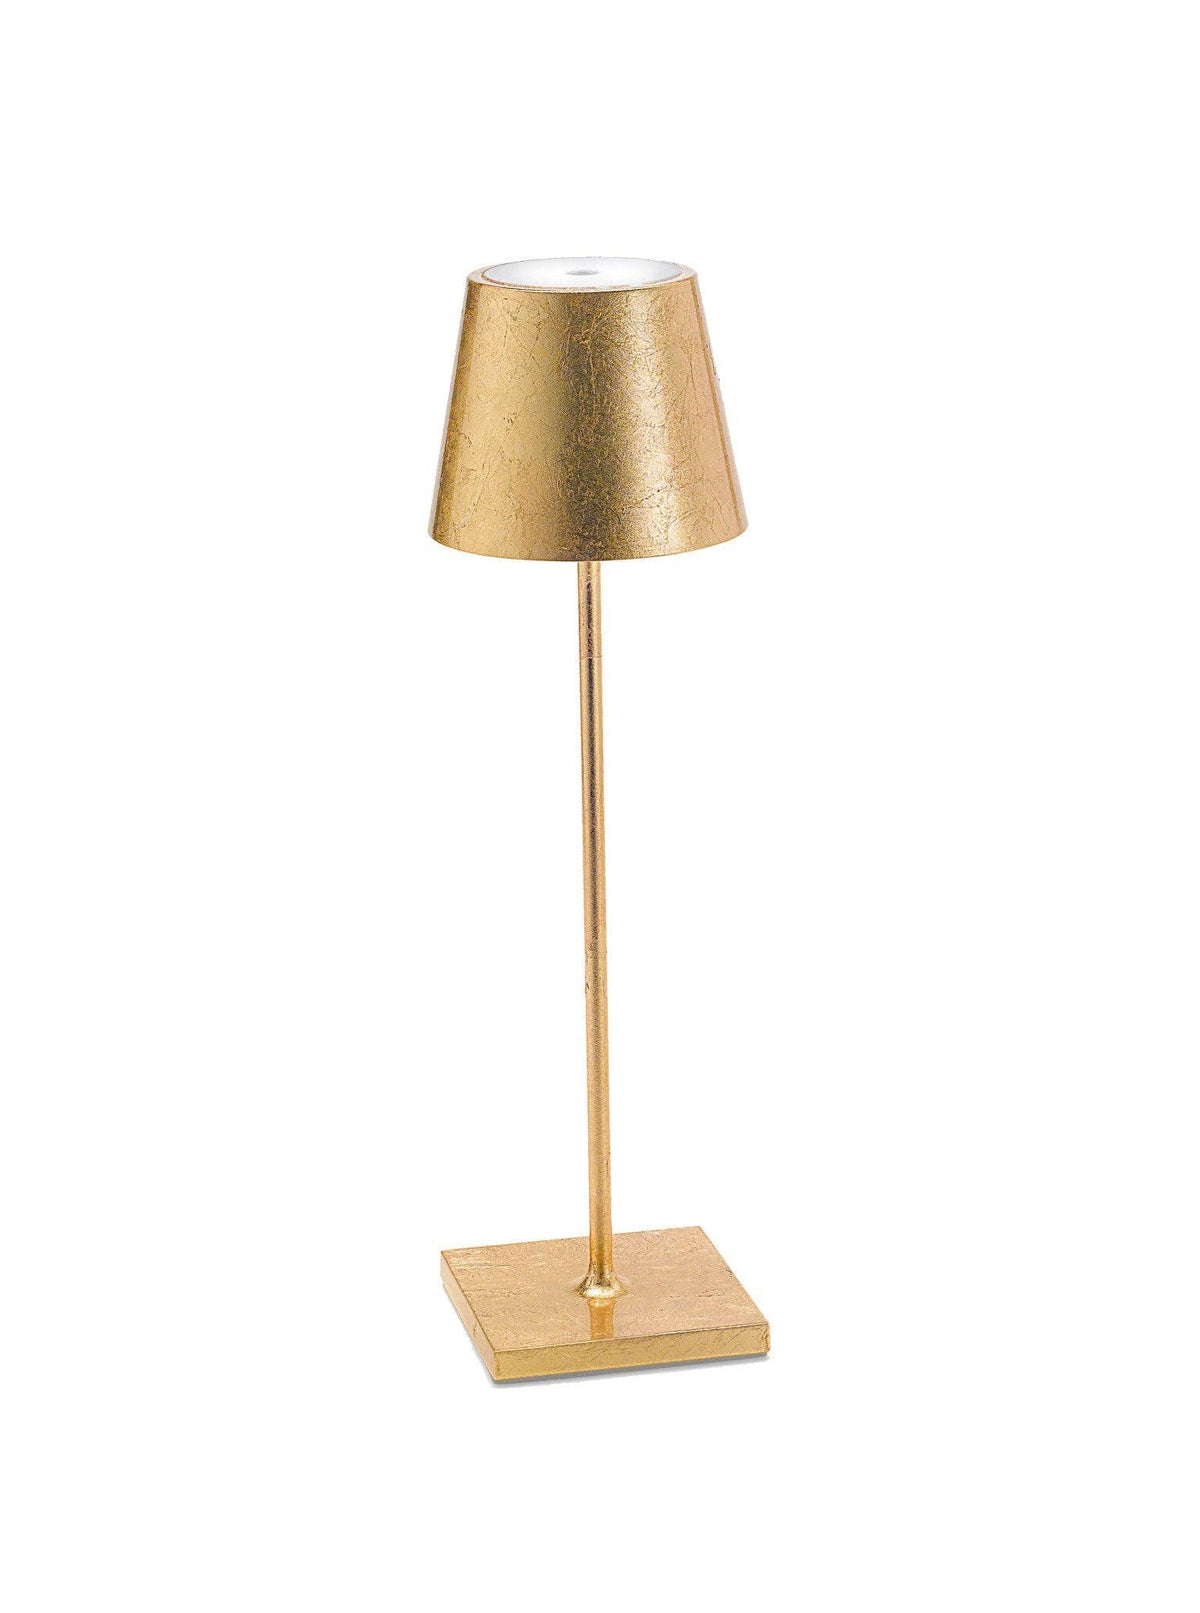 Poldina Pro Cordless Lamp in Glossy Gold - The Preppy Bunny